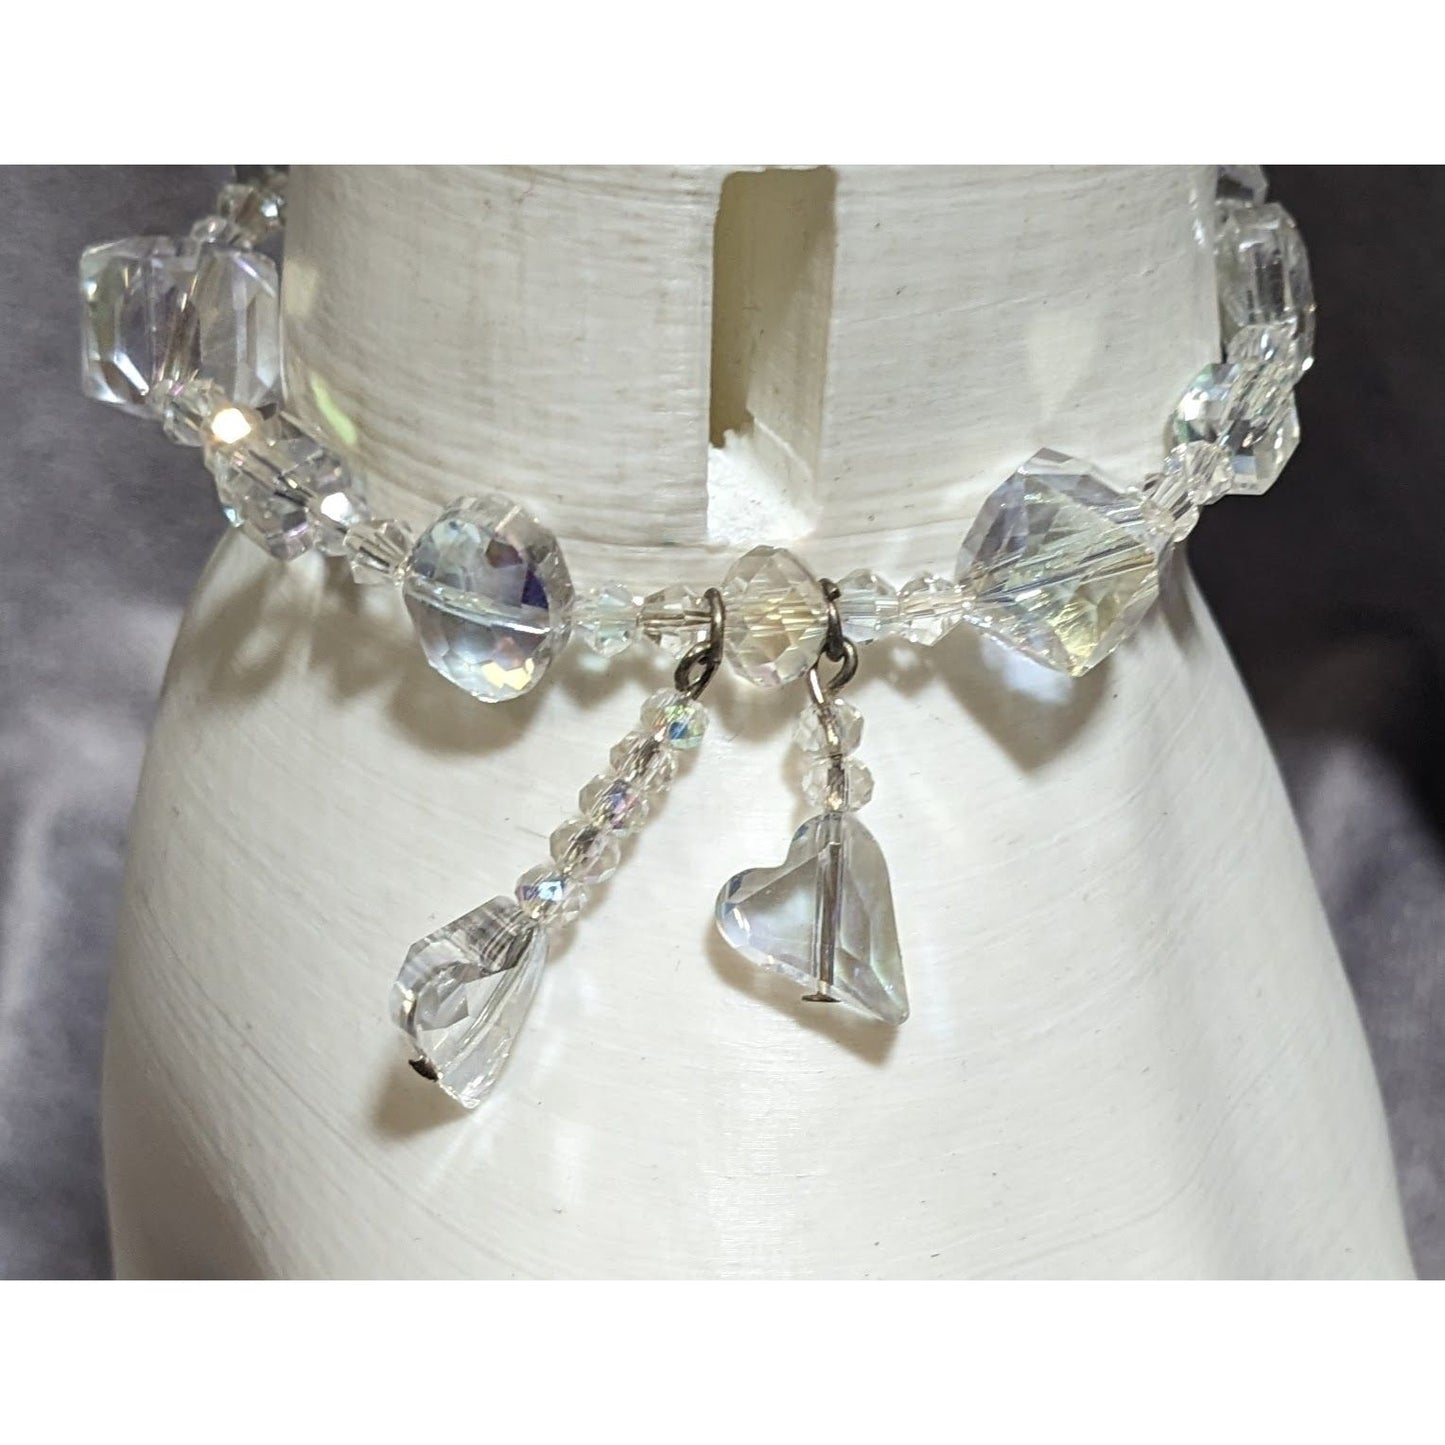 Sparkly Crystal Heart Bracelet